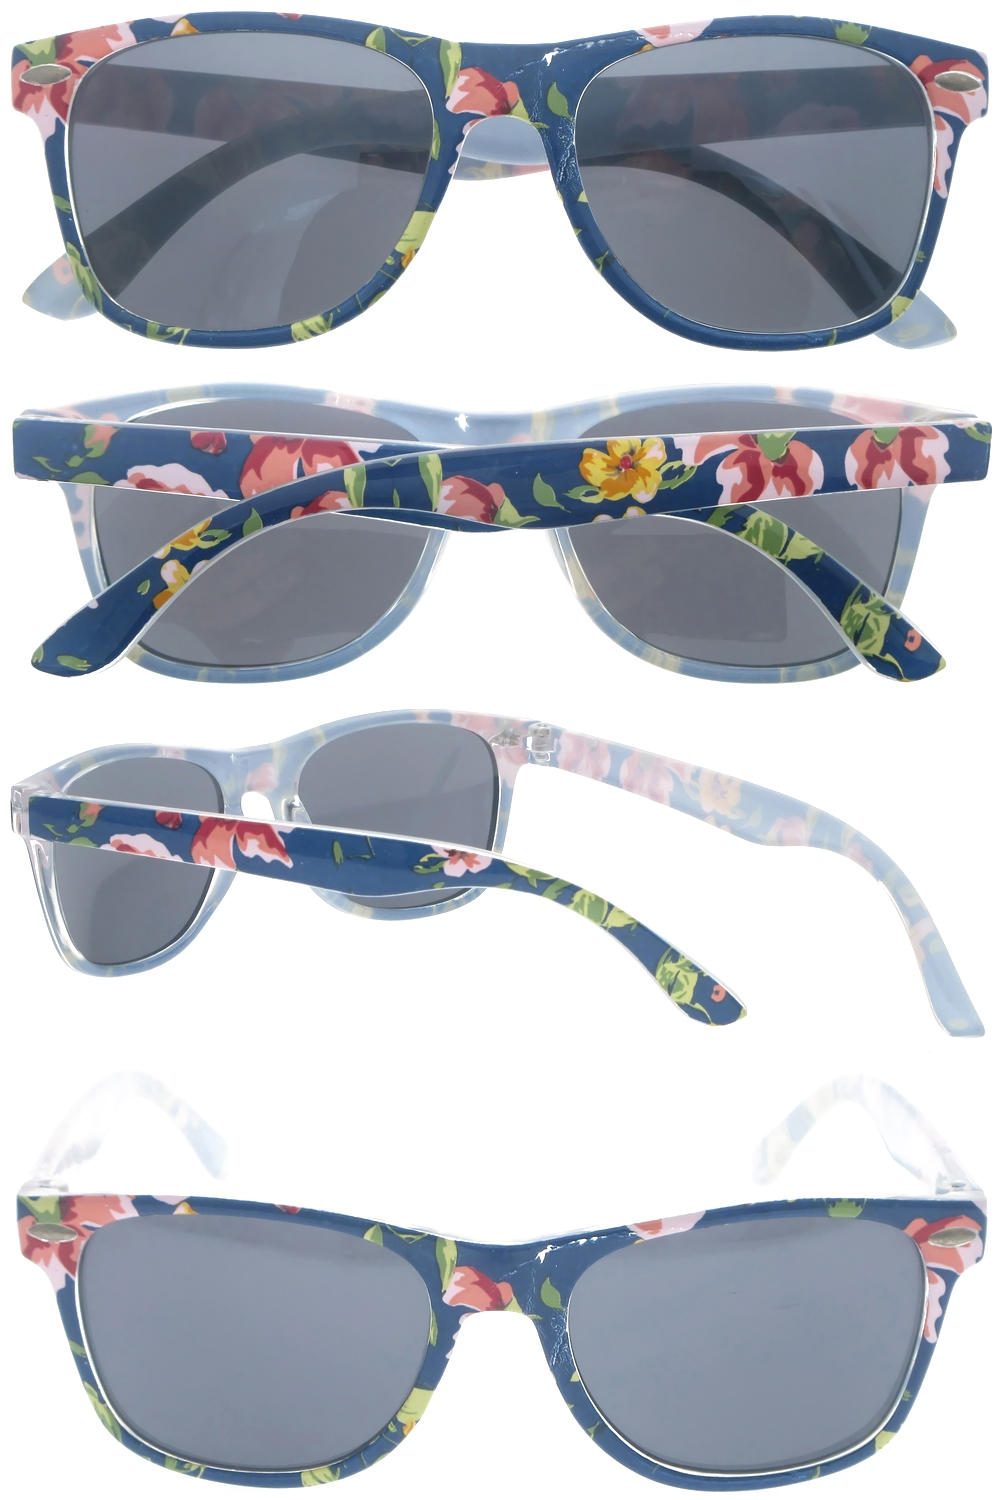 Dachuan Optical DSPK342016 China Manufacture Factory Wayfarer Design Unisex Kids Sunglasses with Pattern Frame (3)